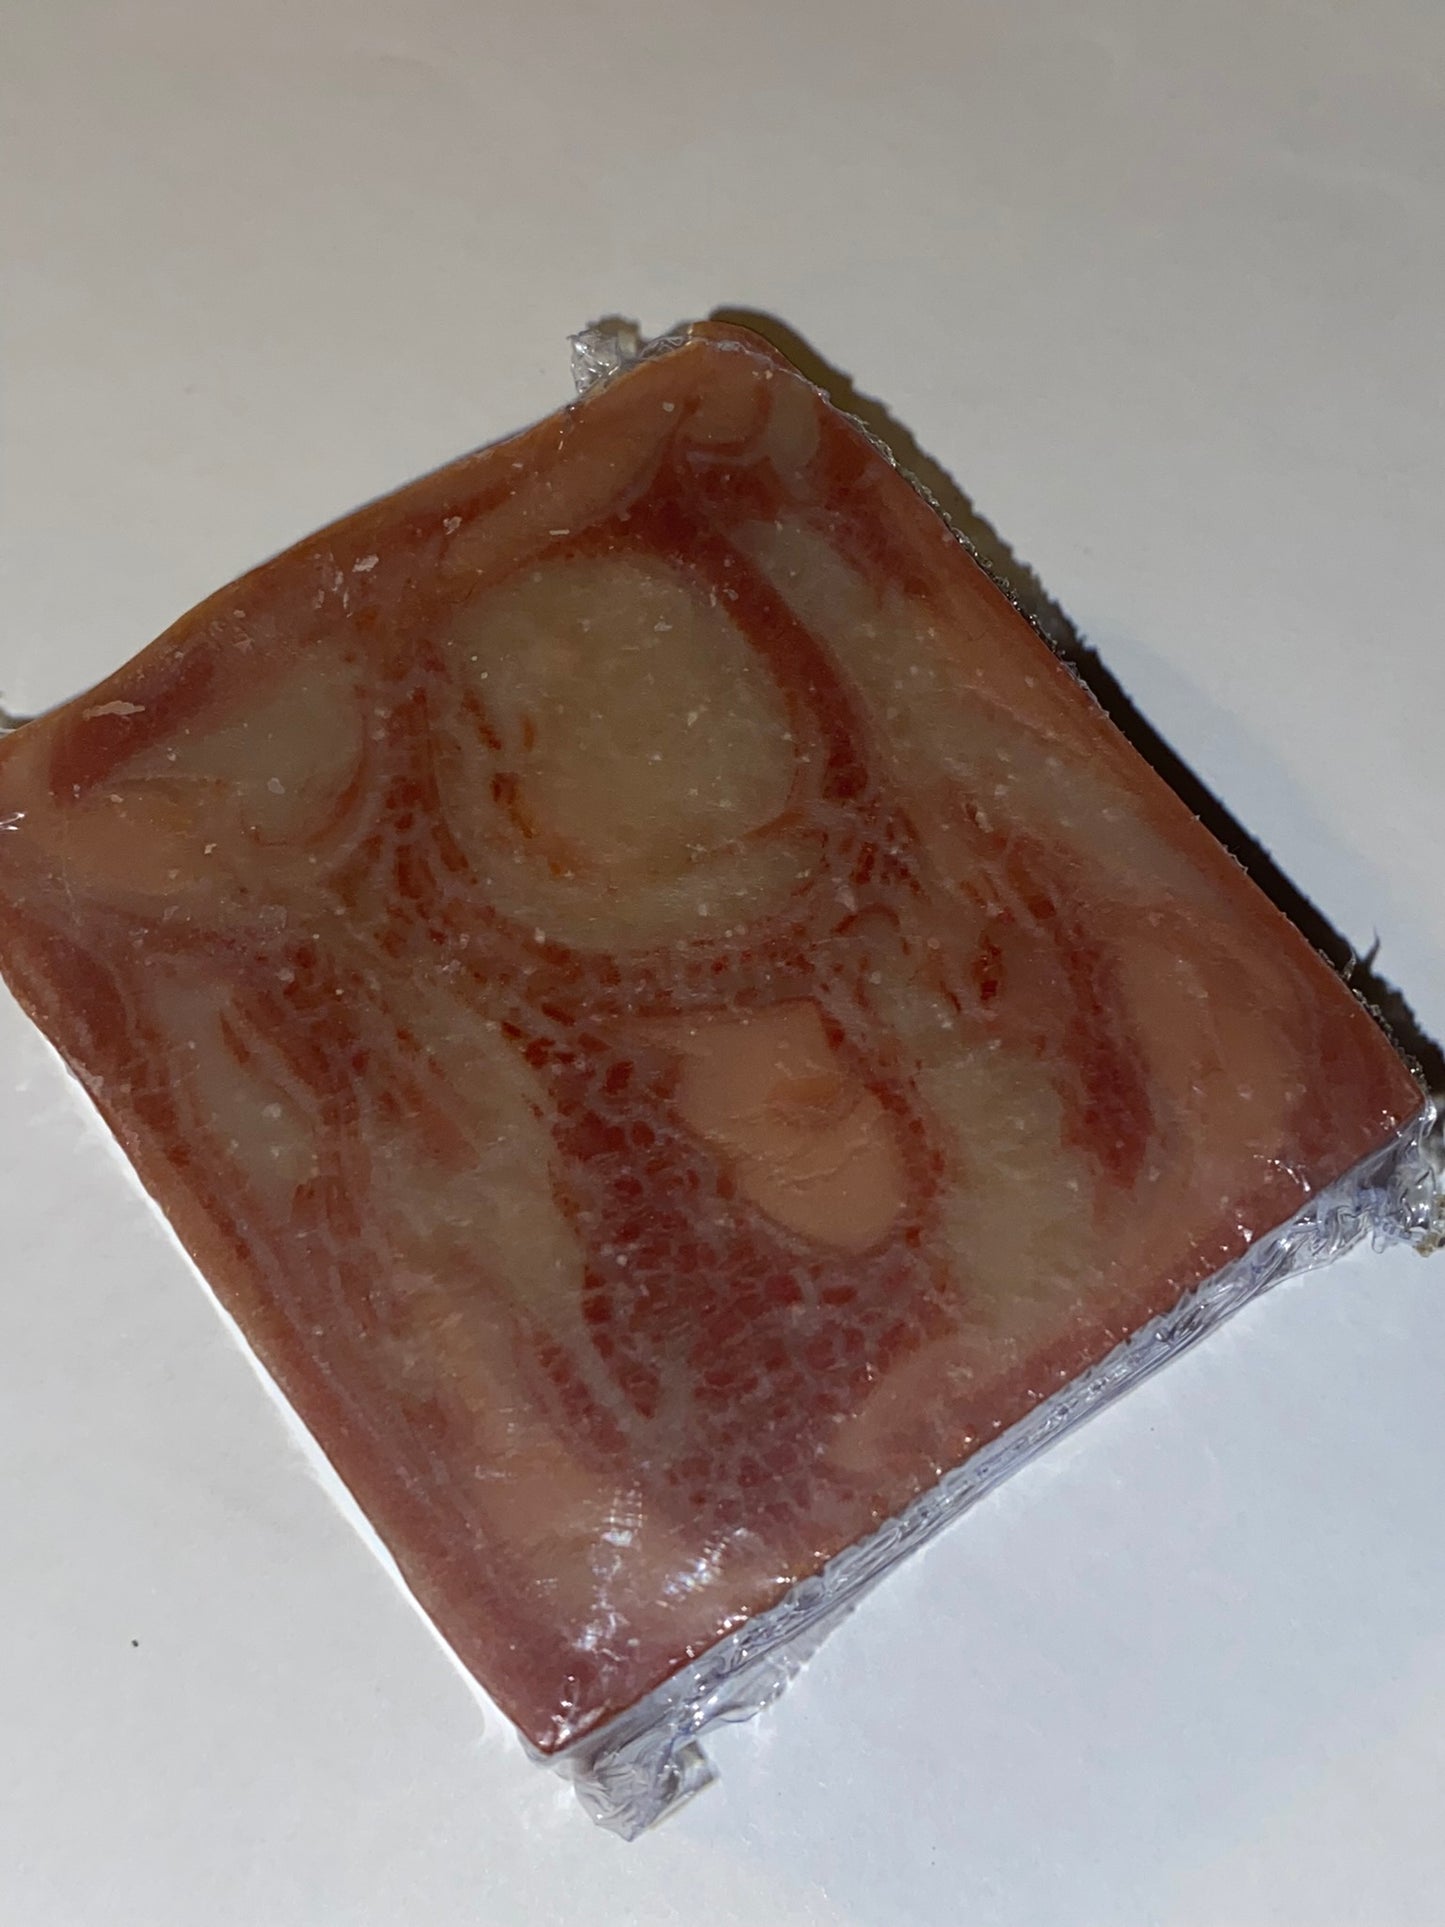 Brown and tan swirl soap